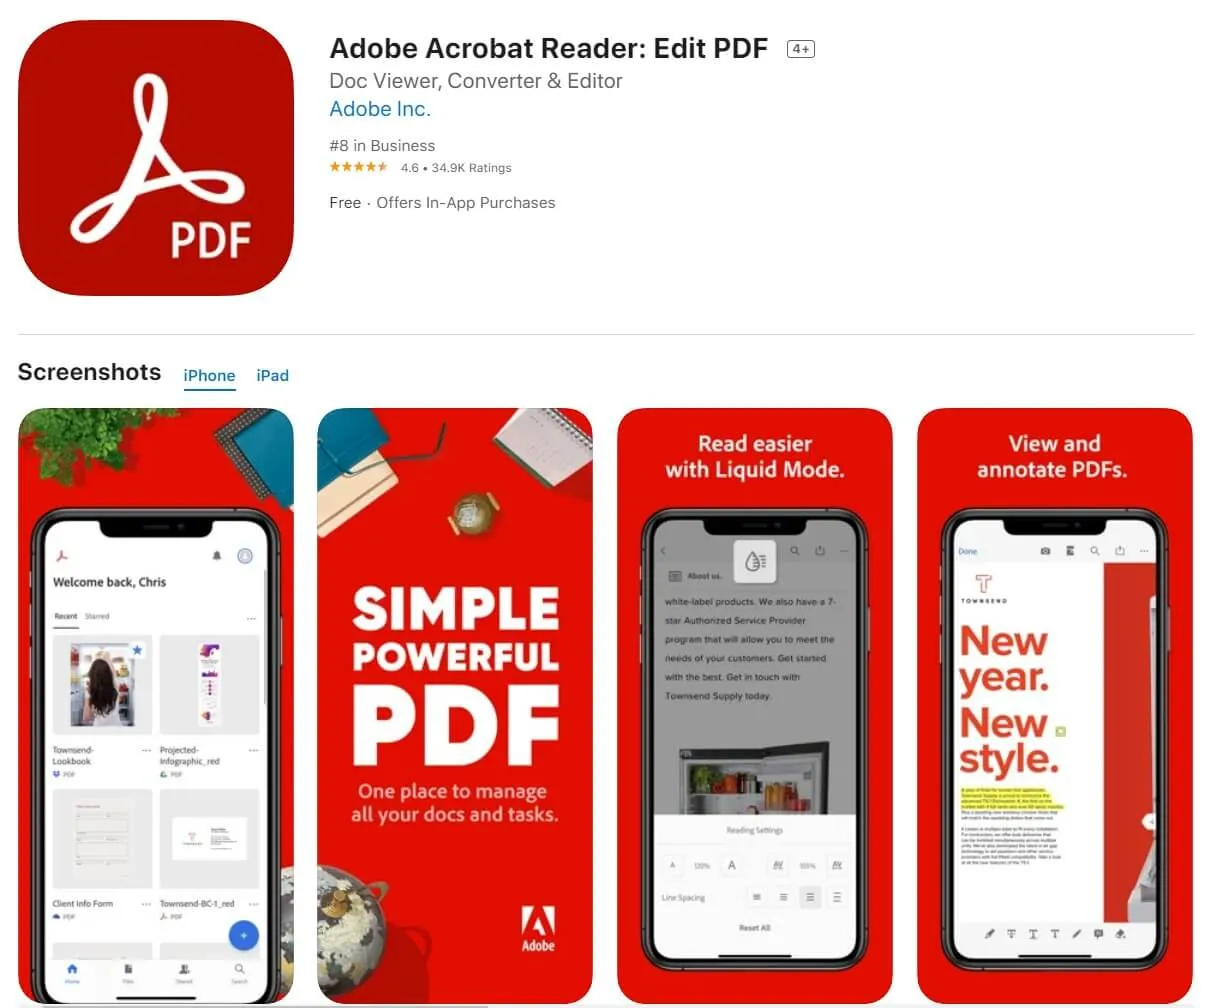 PDF-Reader iPhone - Adobe Acrobat Reader